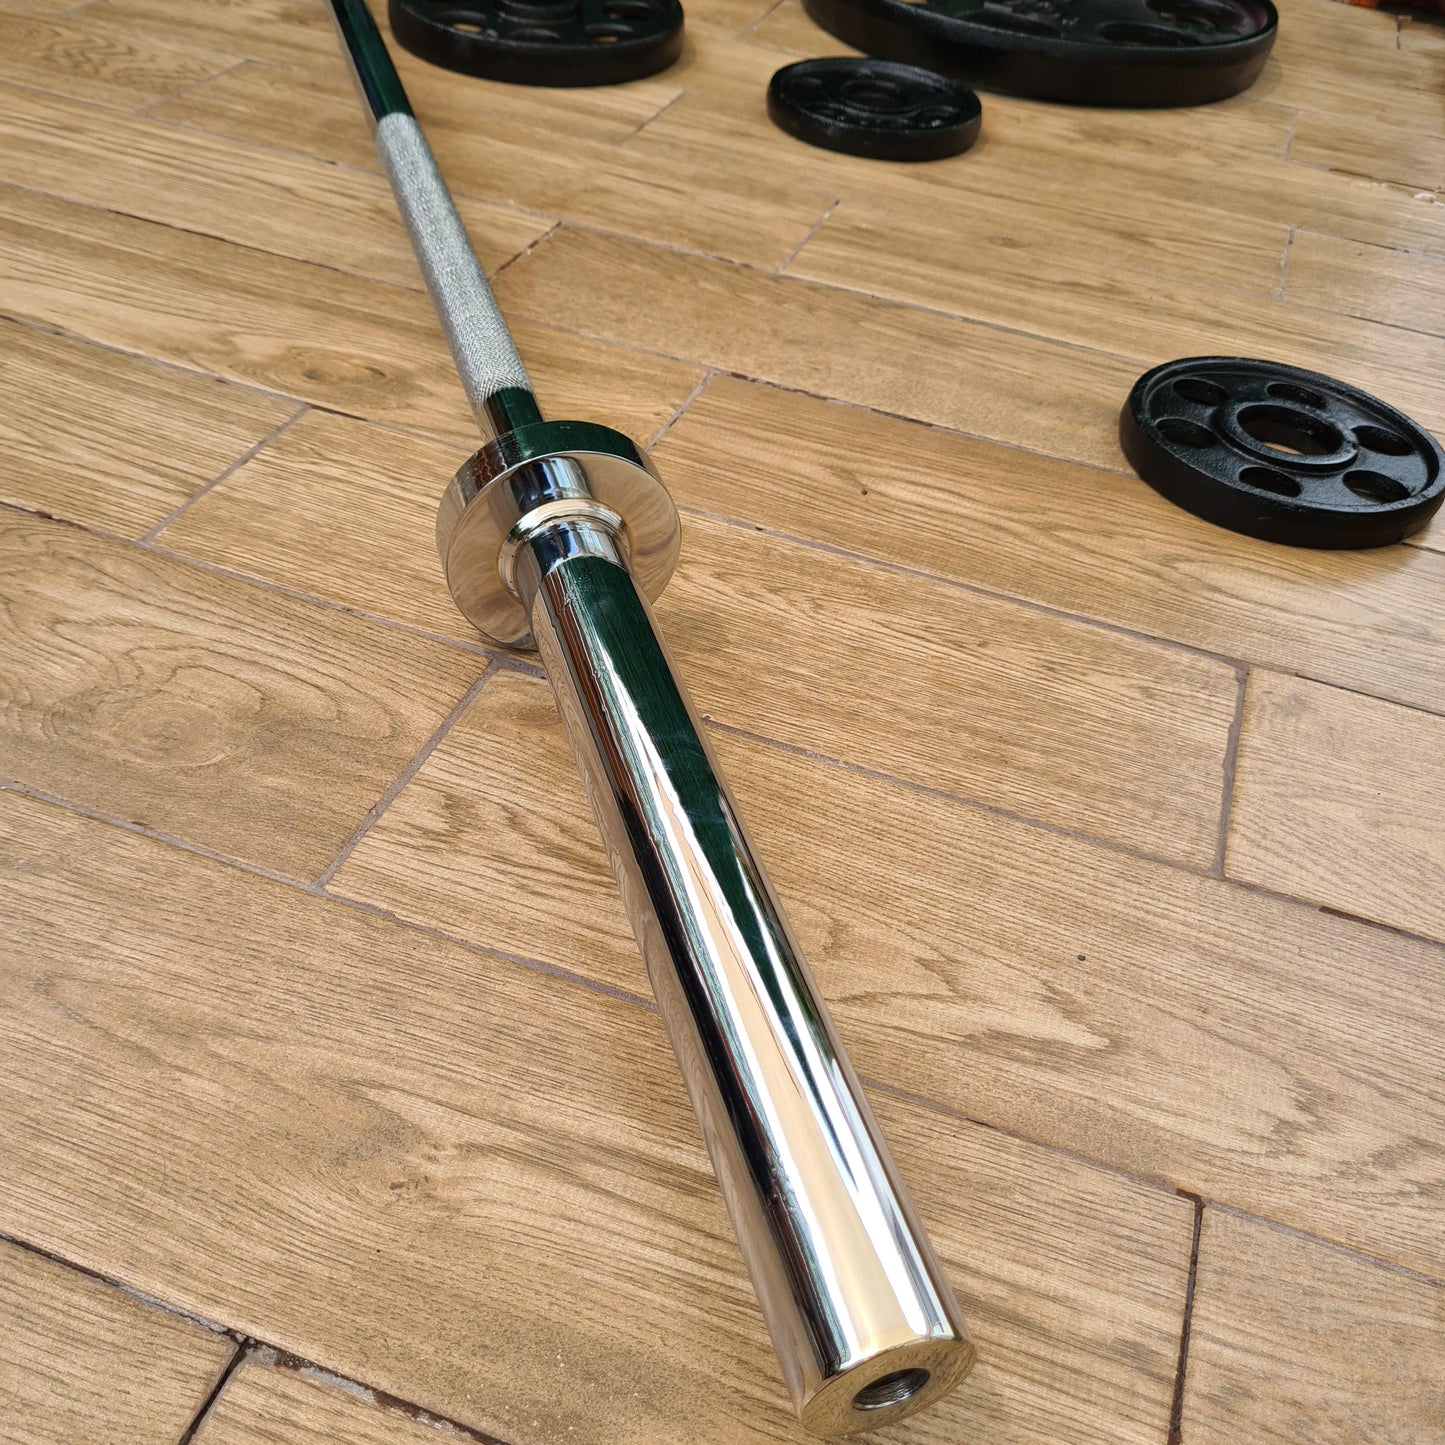 Barra olimpica 2 20 kg – GymaholicMx